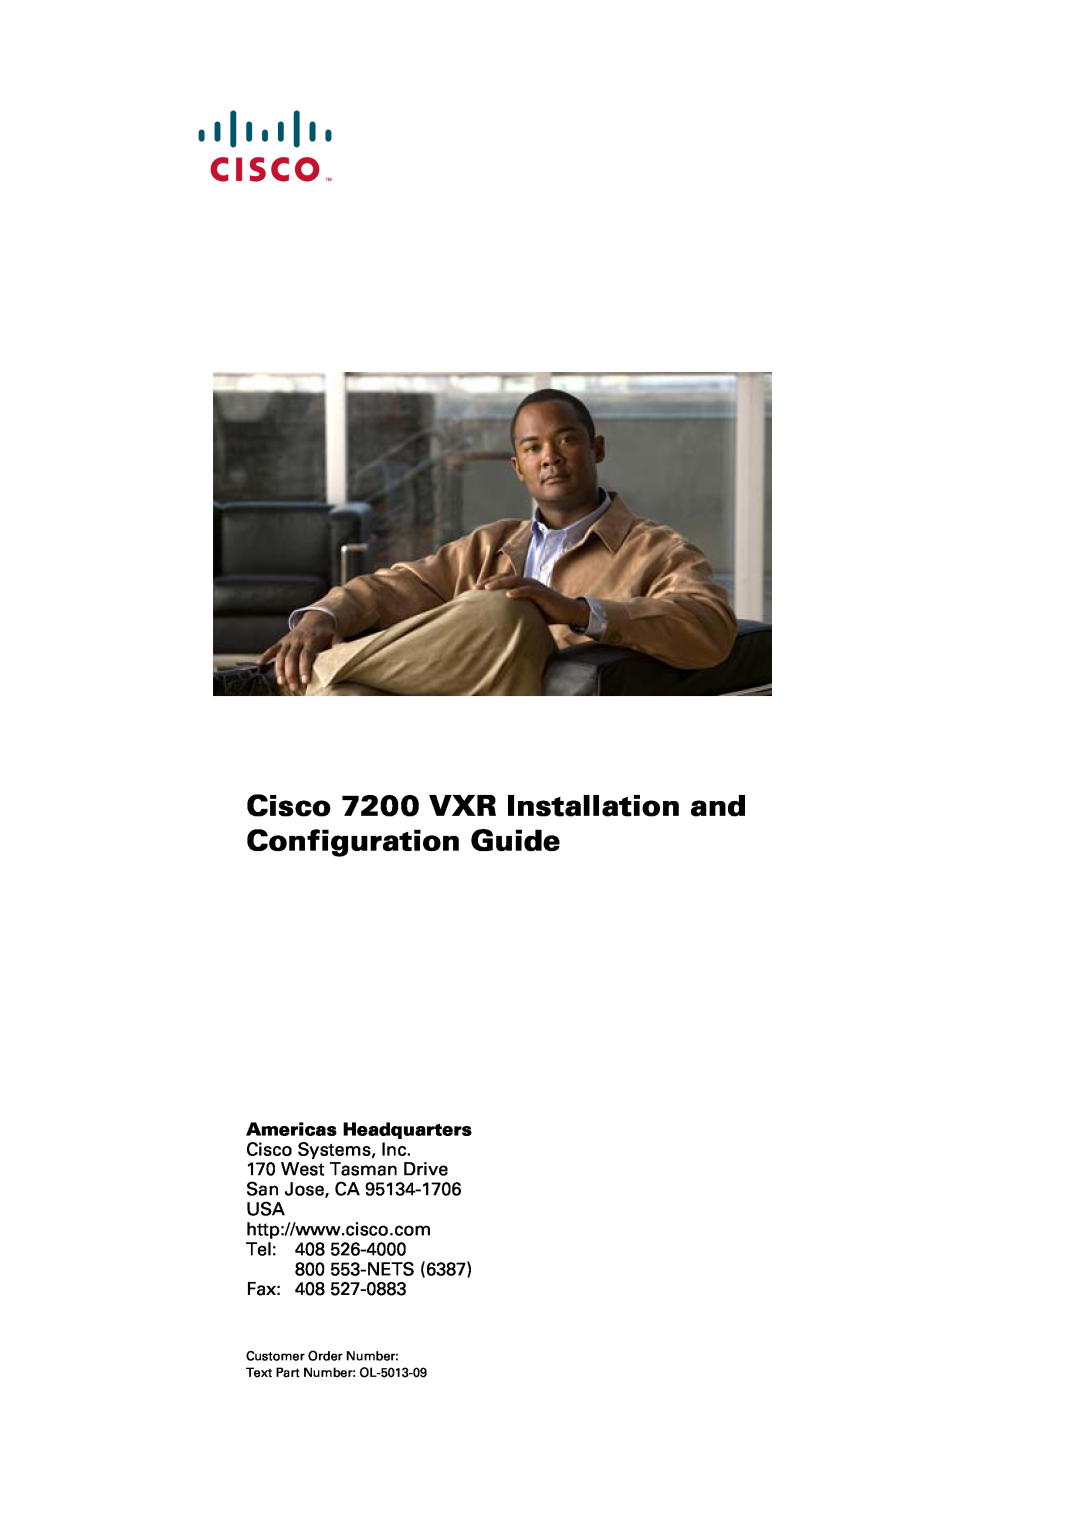 Cisco Systems 7200 VXR manual Cisco Systems, Inc 170 West Tasman Drive San Jose, CA, 800 553-NETS Fax 408 